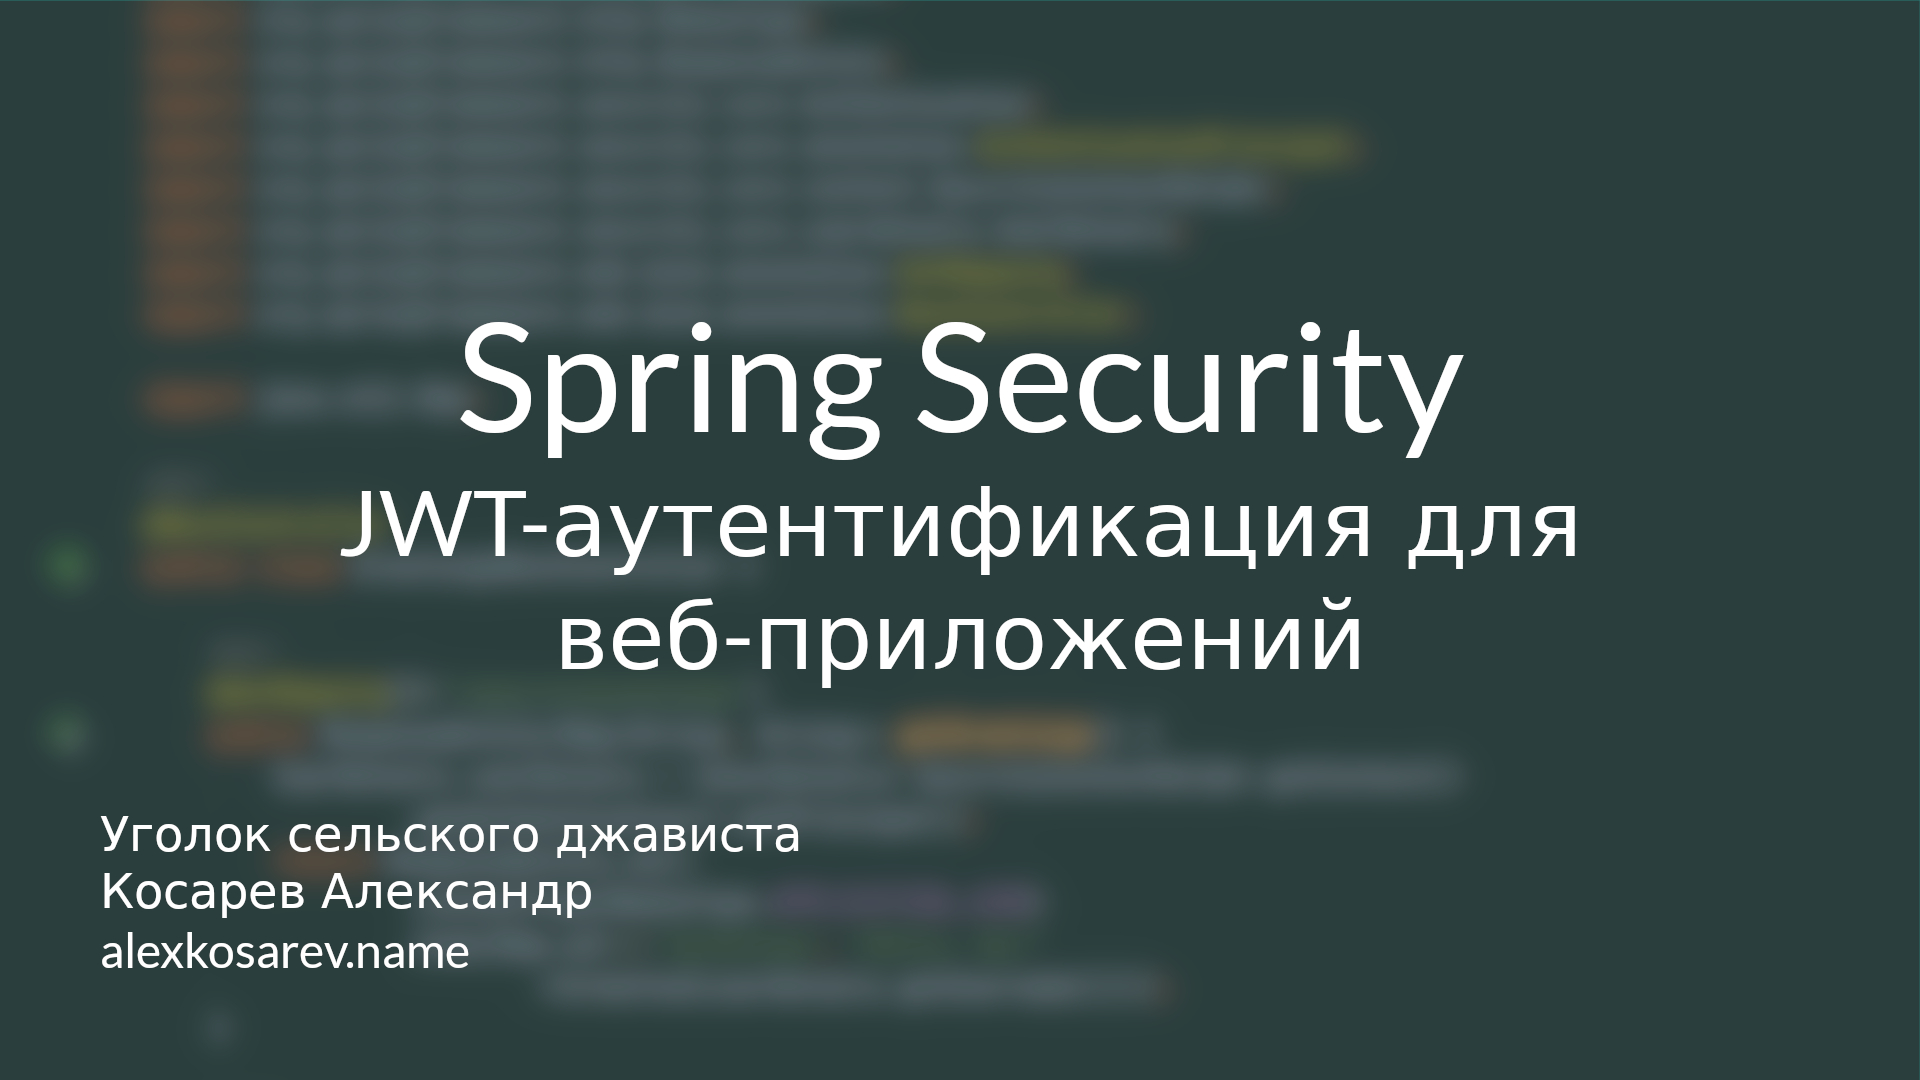 JWT-аутентификация для веб-приложений - Spring Security